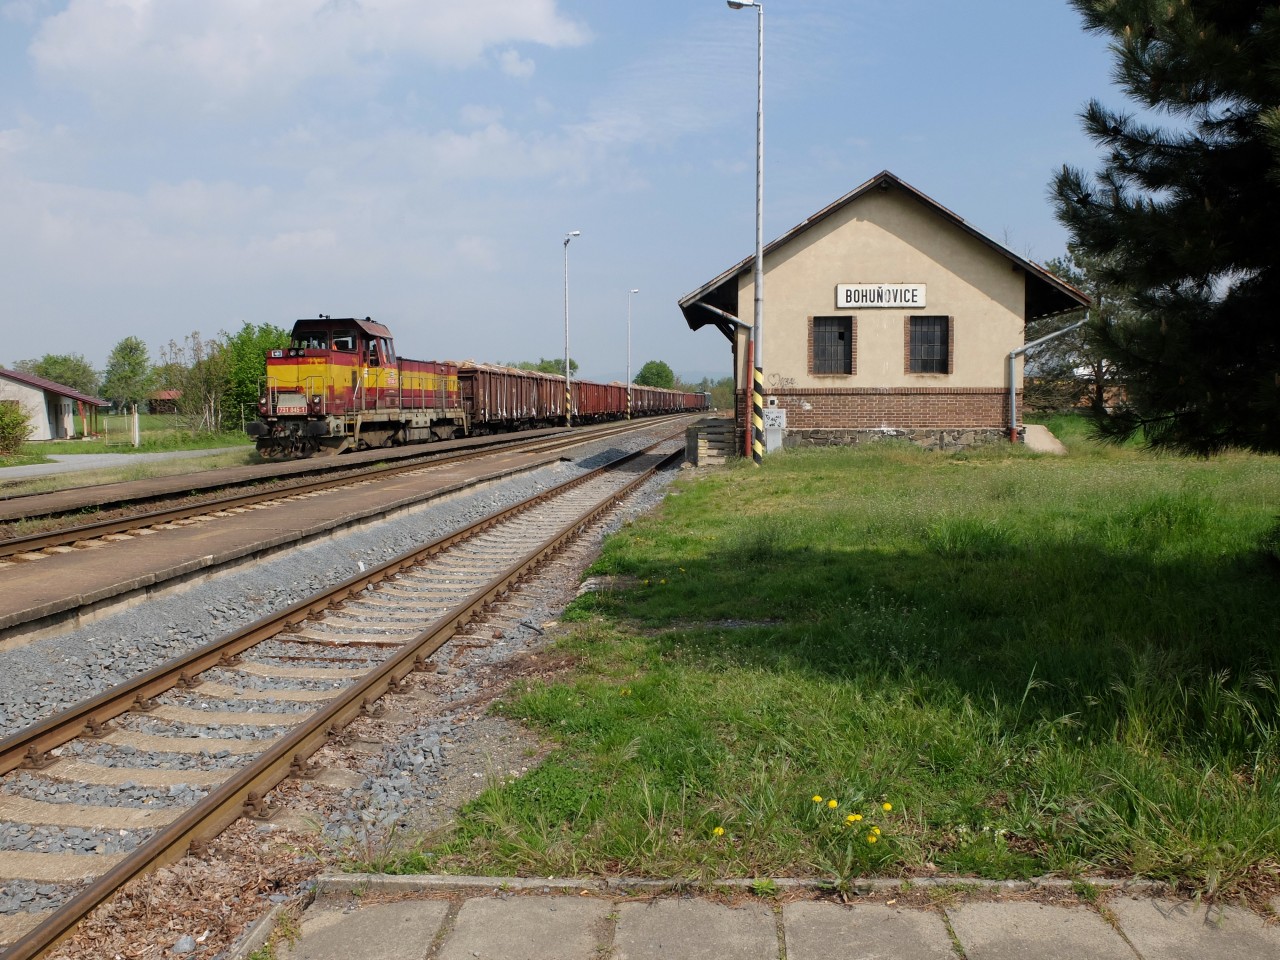 manipulan vlak,co byl k vidn ve ternberku, u val na Olomouc